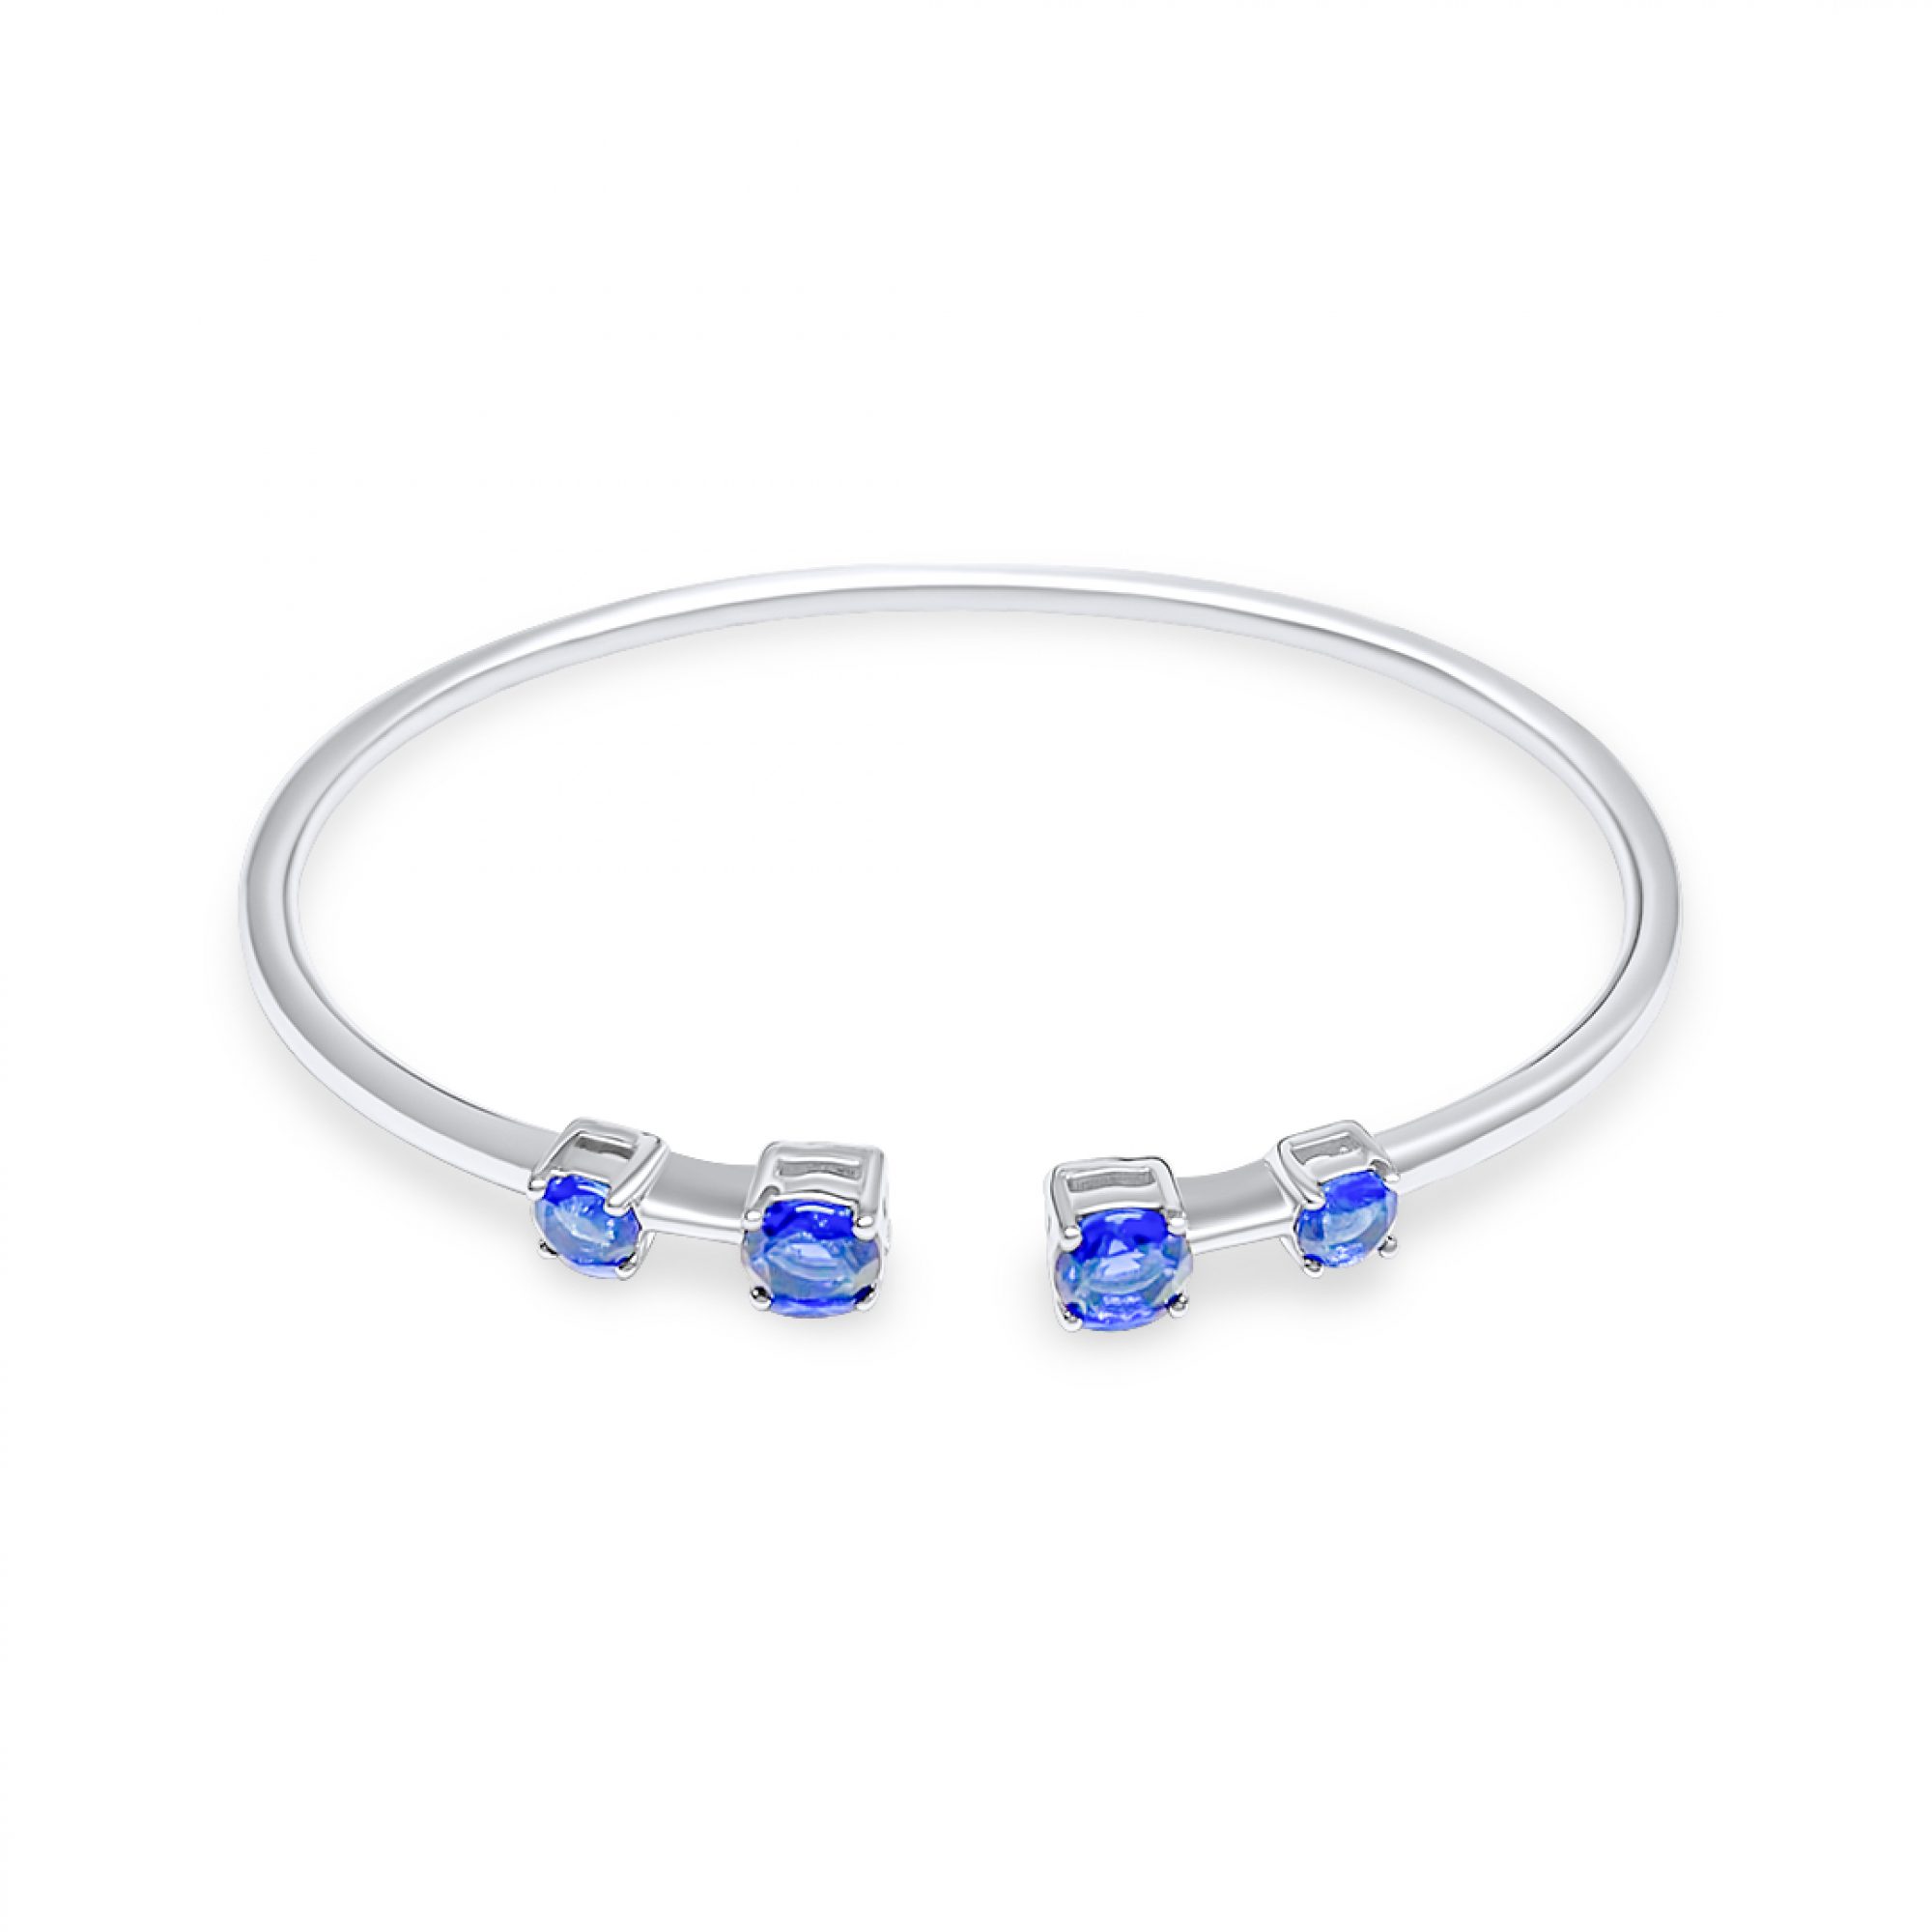 Adjustable bracelet with sapphire stones